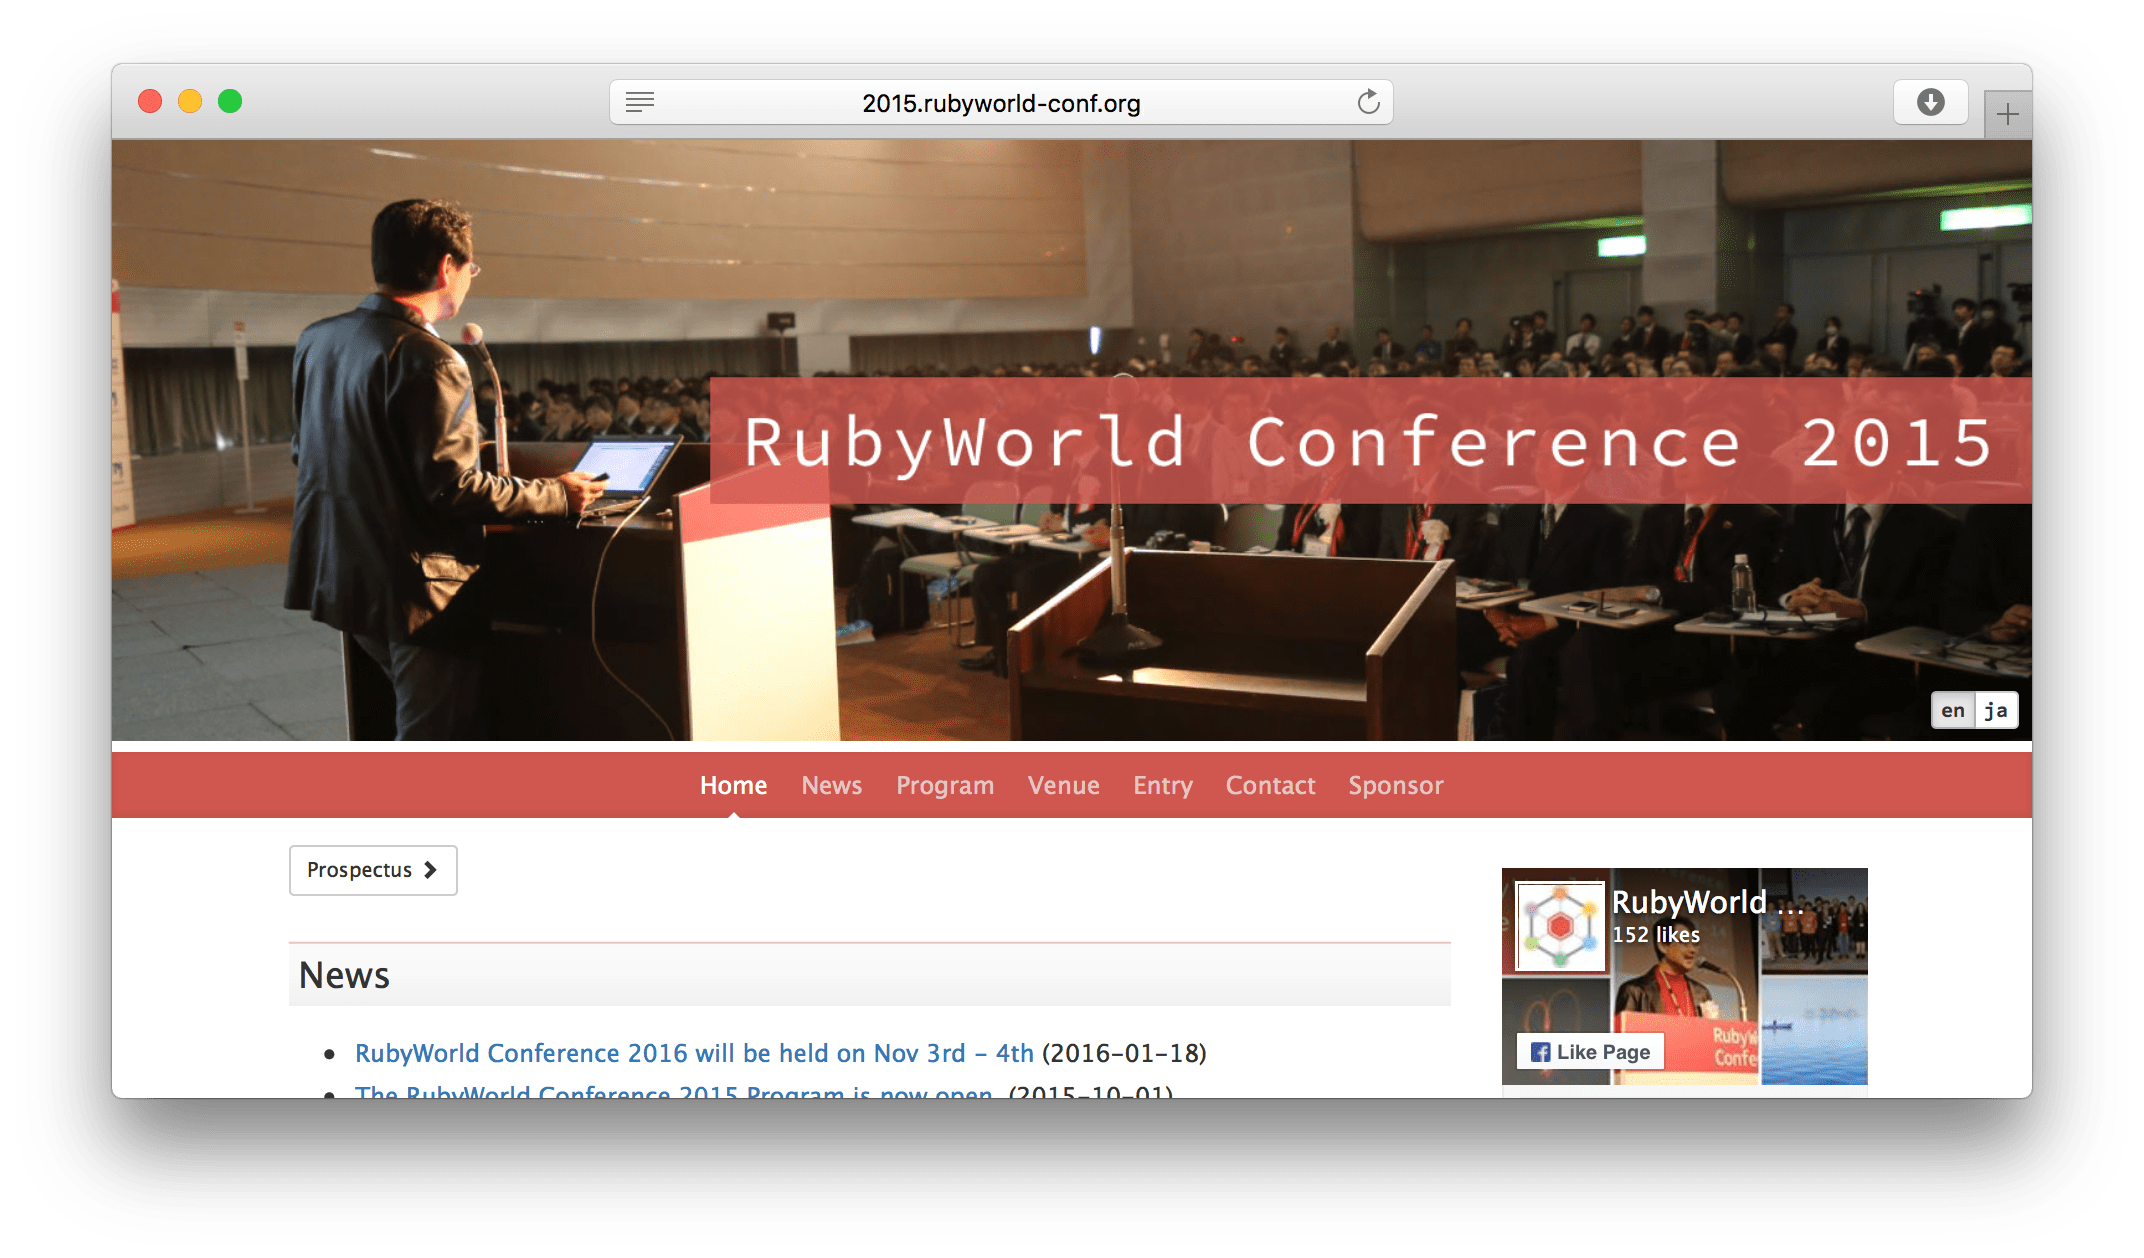 RubyWorld website screenshot